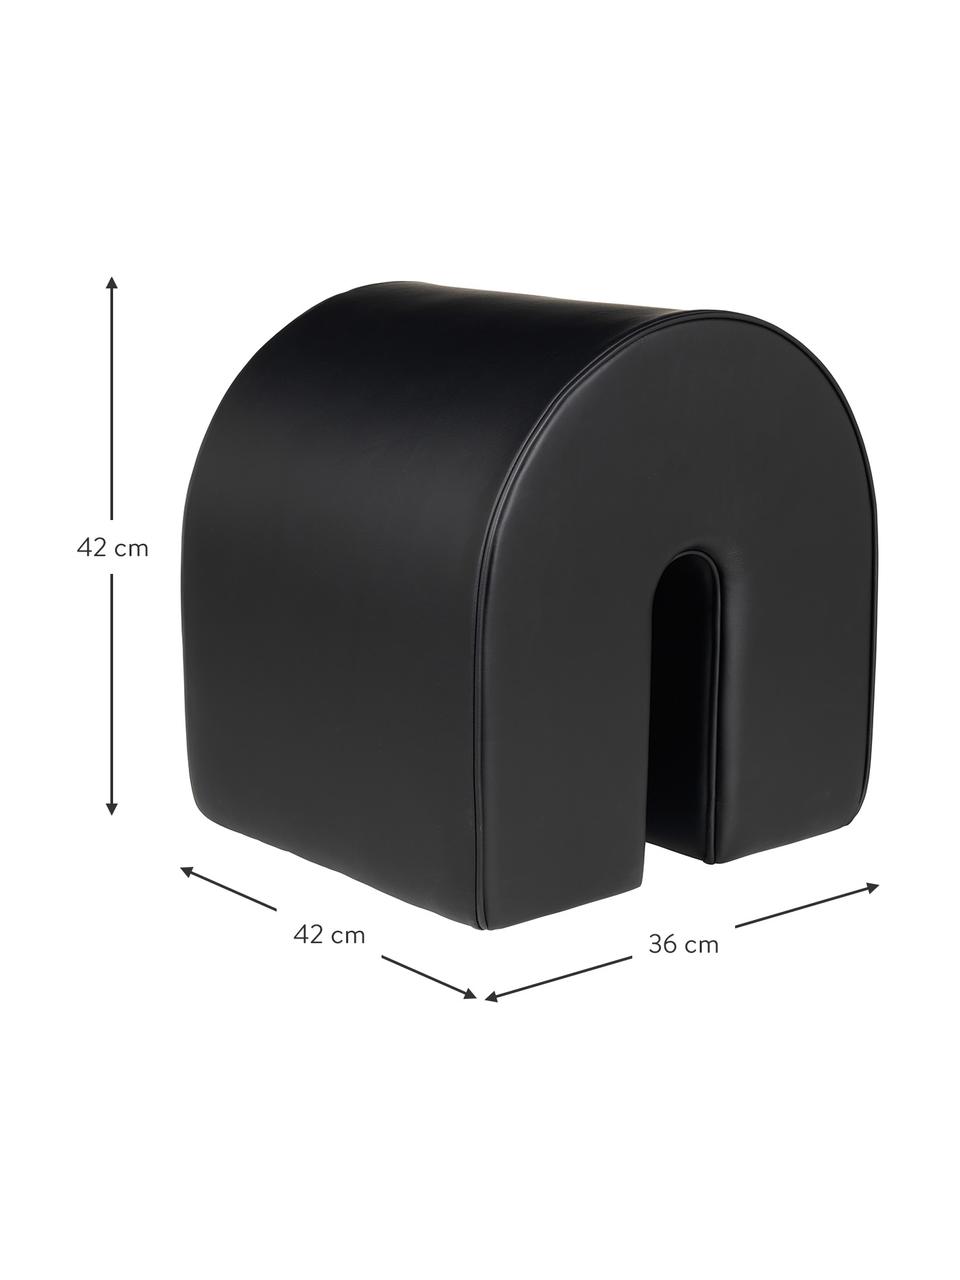 Polsterhocker Curved aus Anilinleder, Bezug: Anilinleder, Leder Schwarz, B 36 x H 42 cm